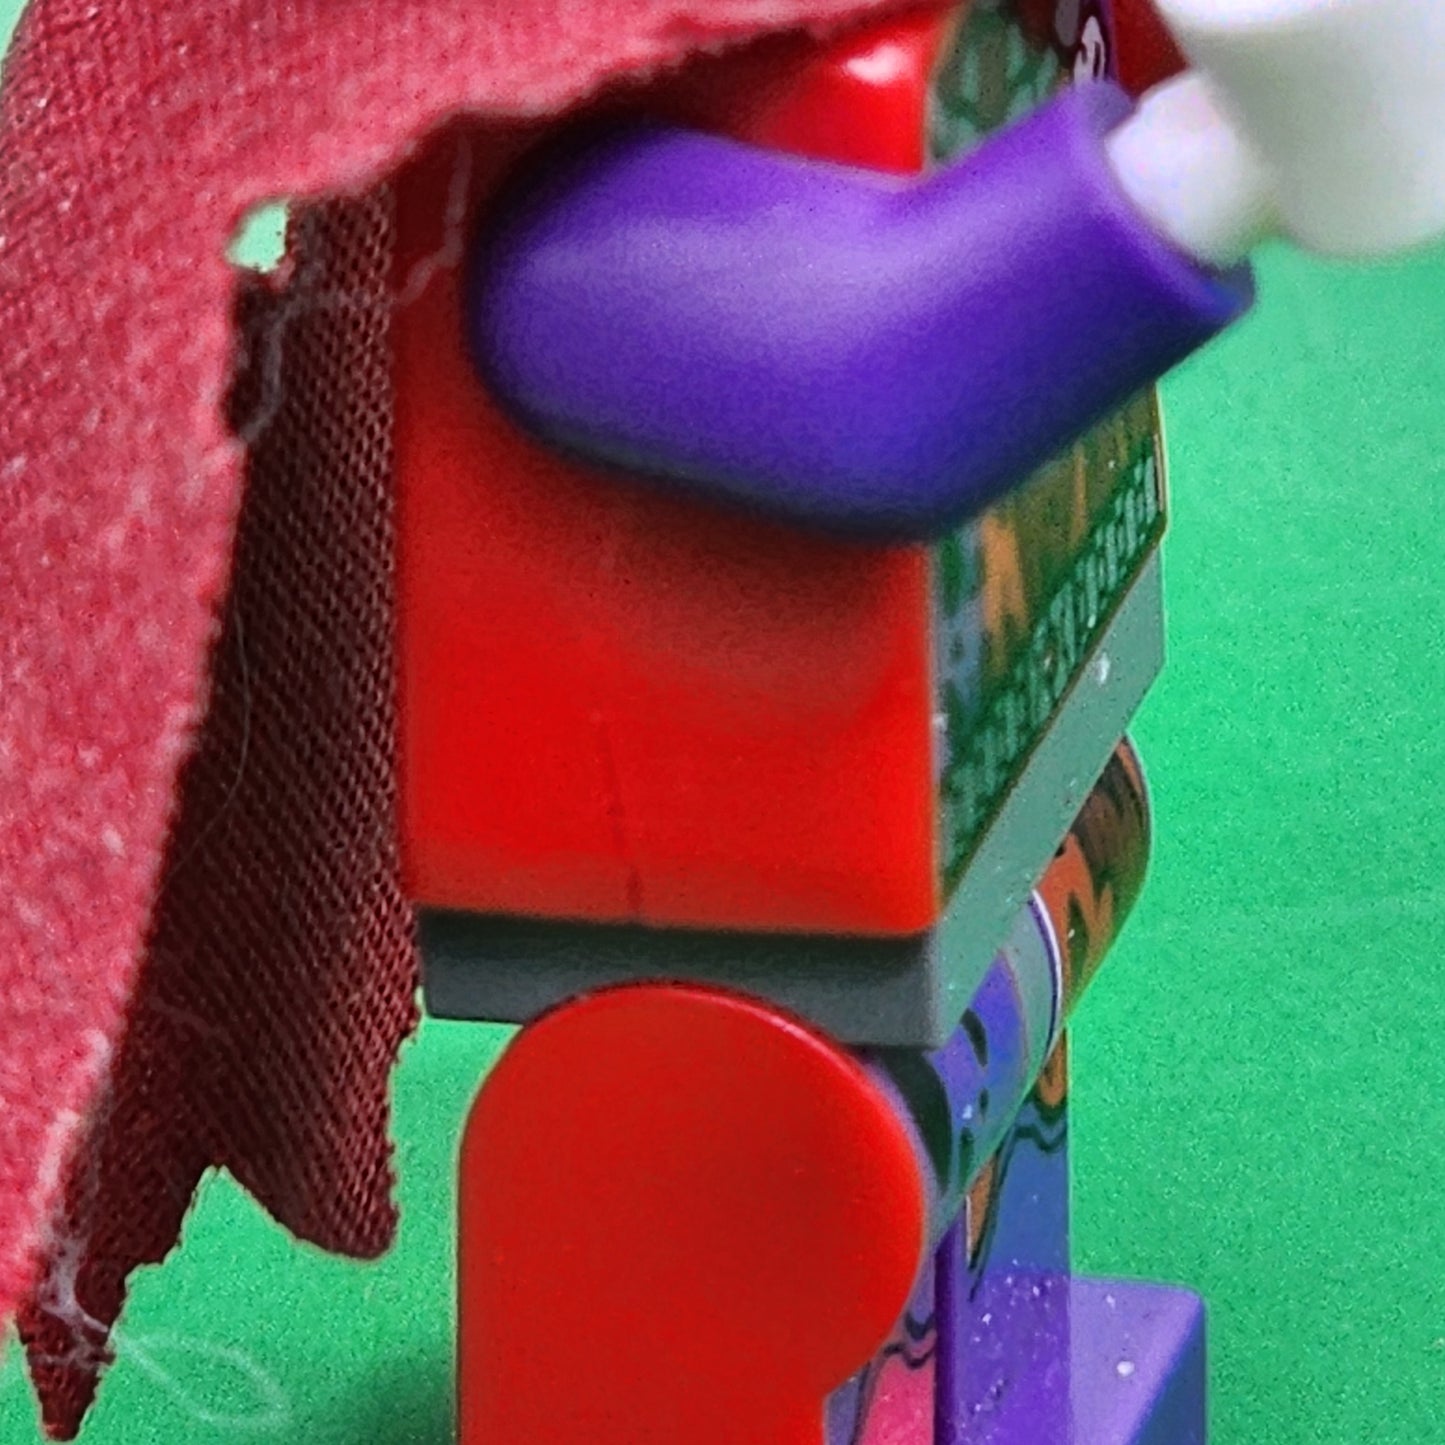 Lego Jestro Minifigure Dark Purple and Red nex013 NEXO KNIGHTS